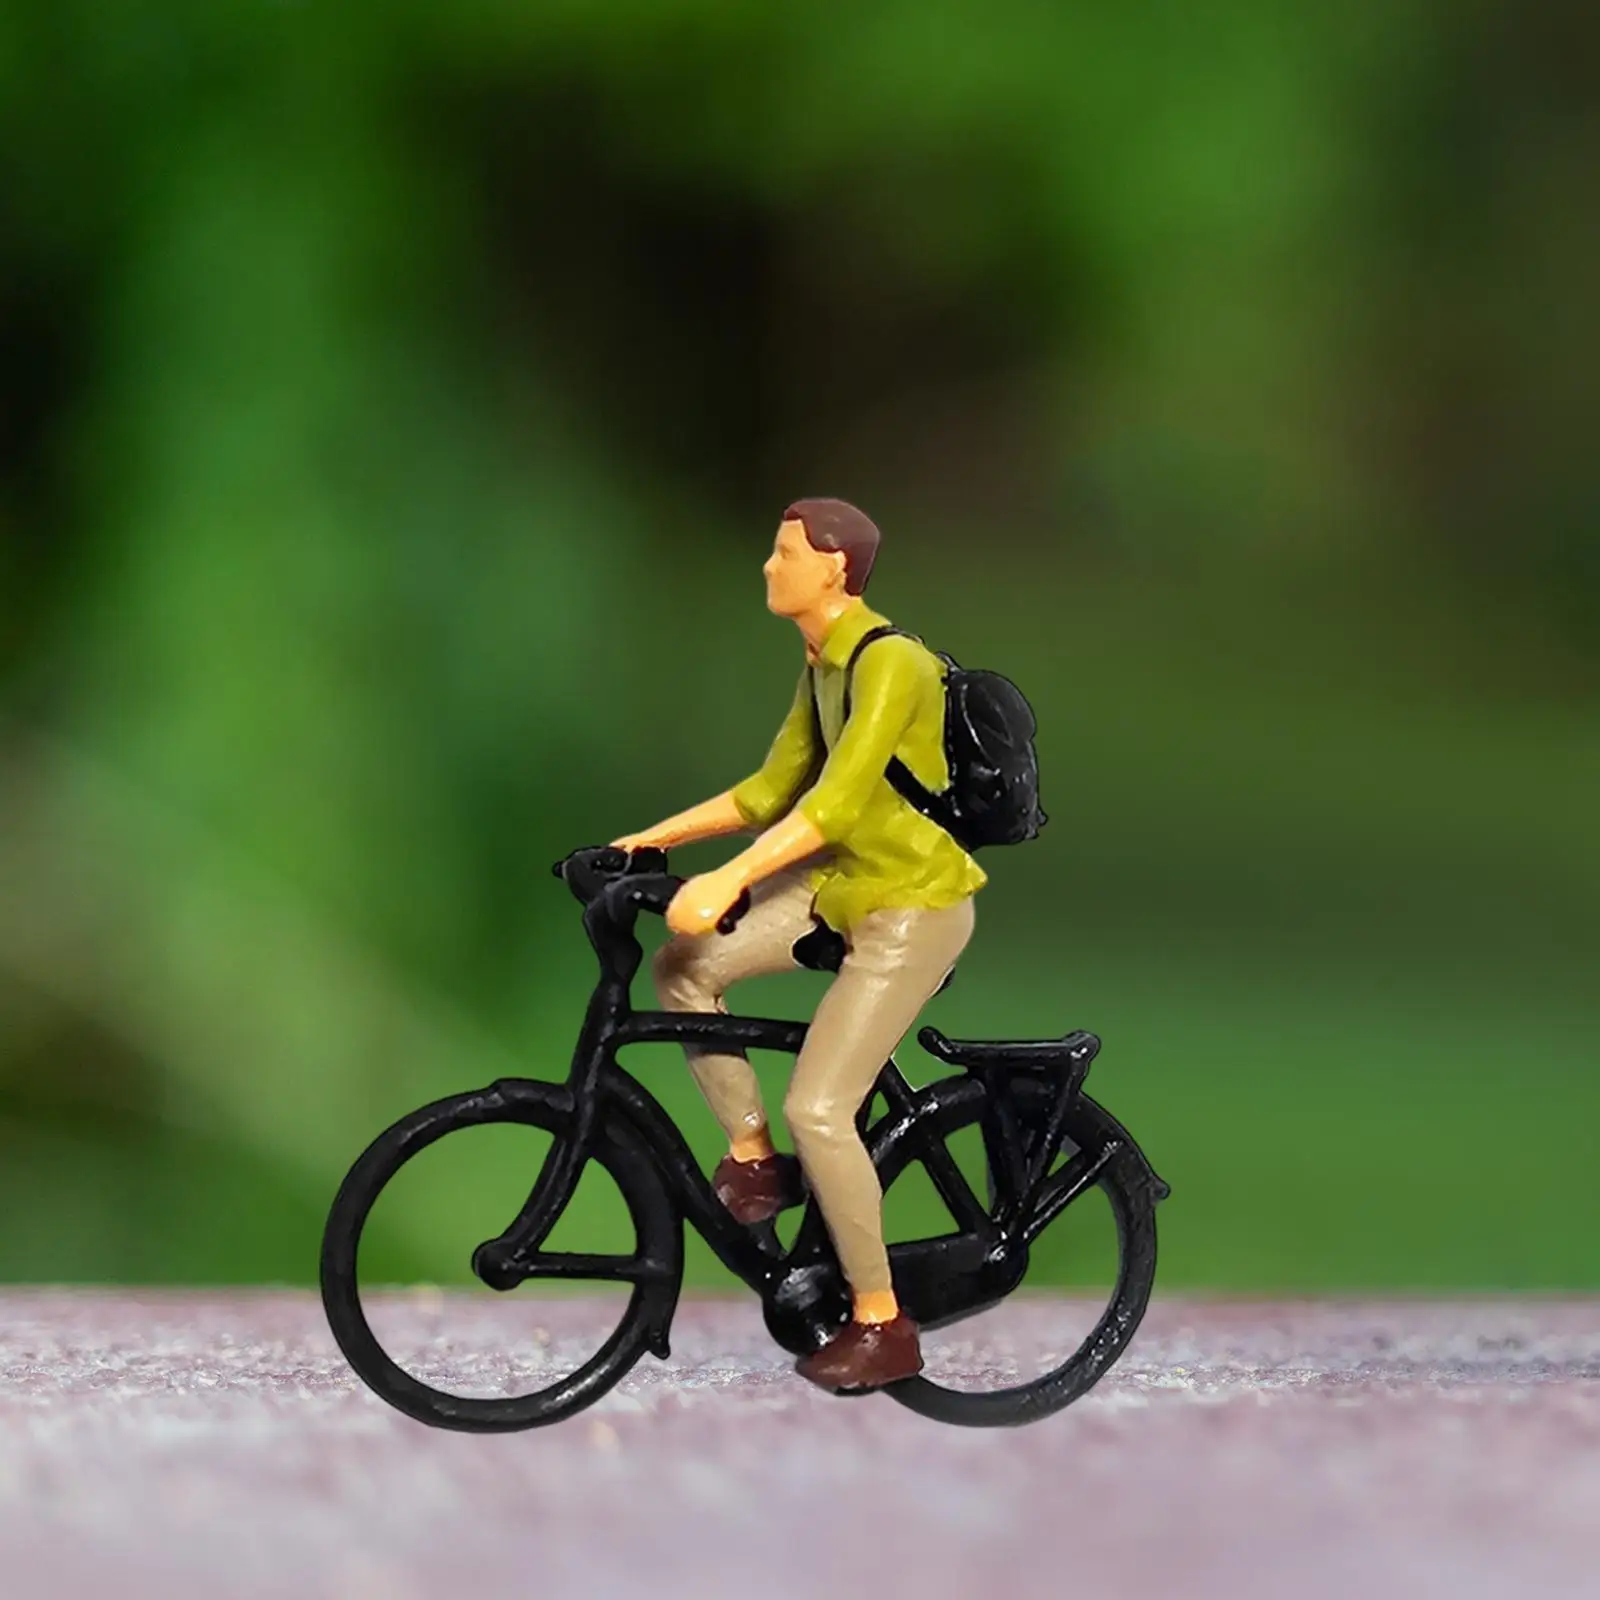 Resin 1/87 Scale Cyclist Figurine, Simulation People Figurines for DIY Scene Decor Diorama Layout